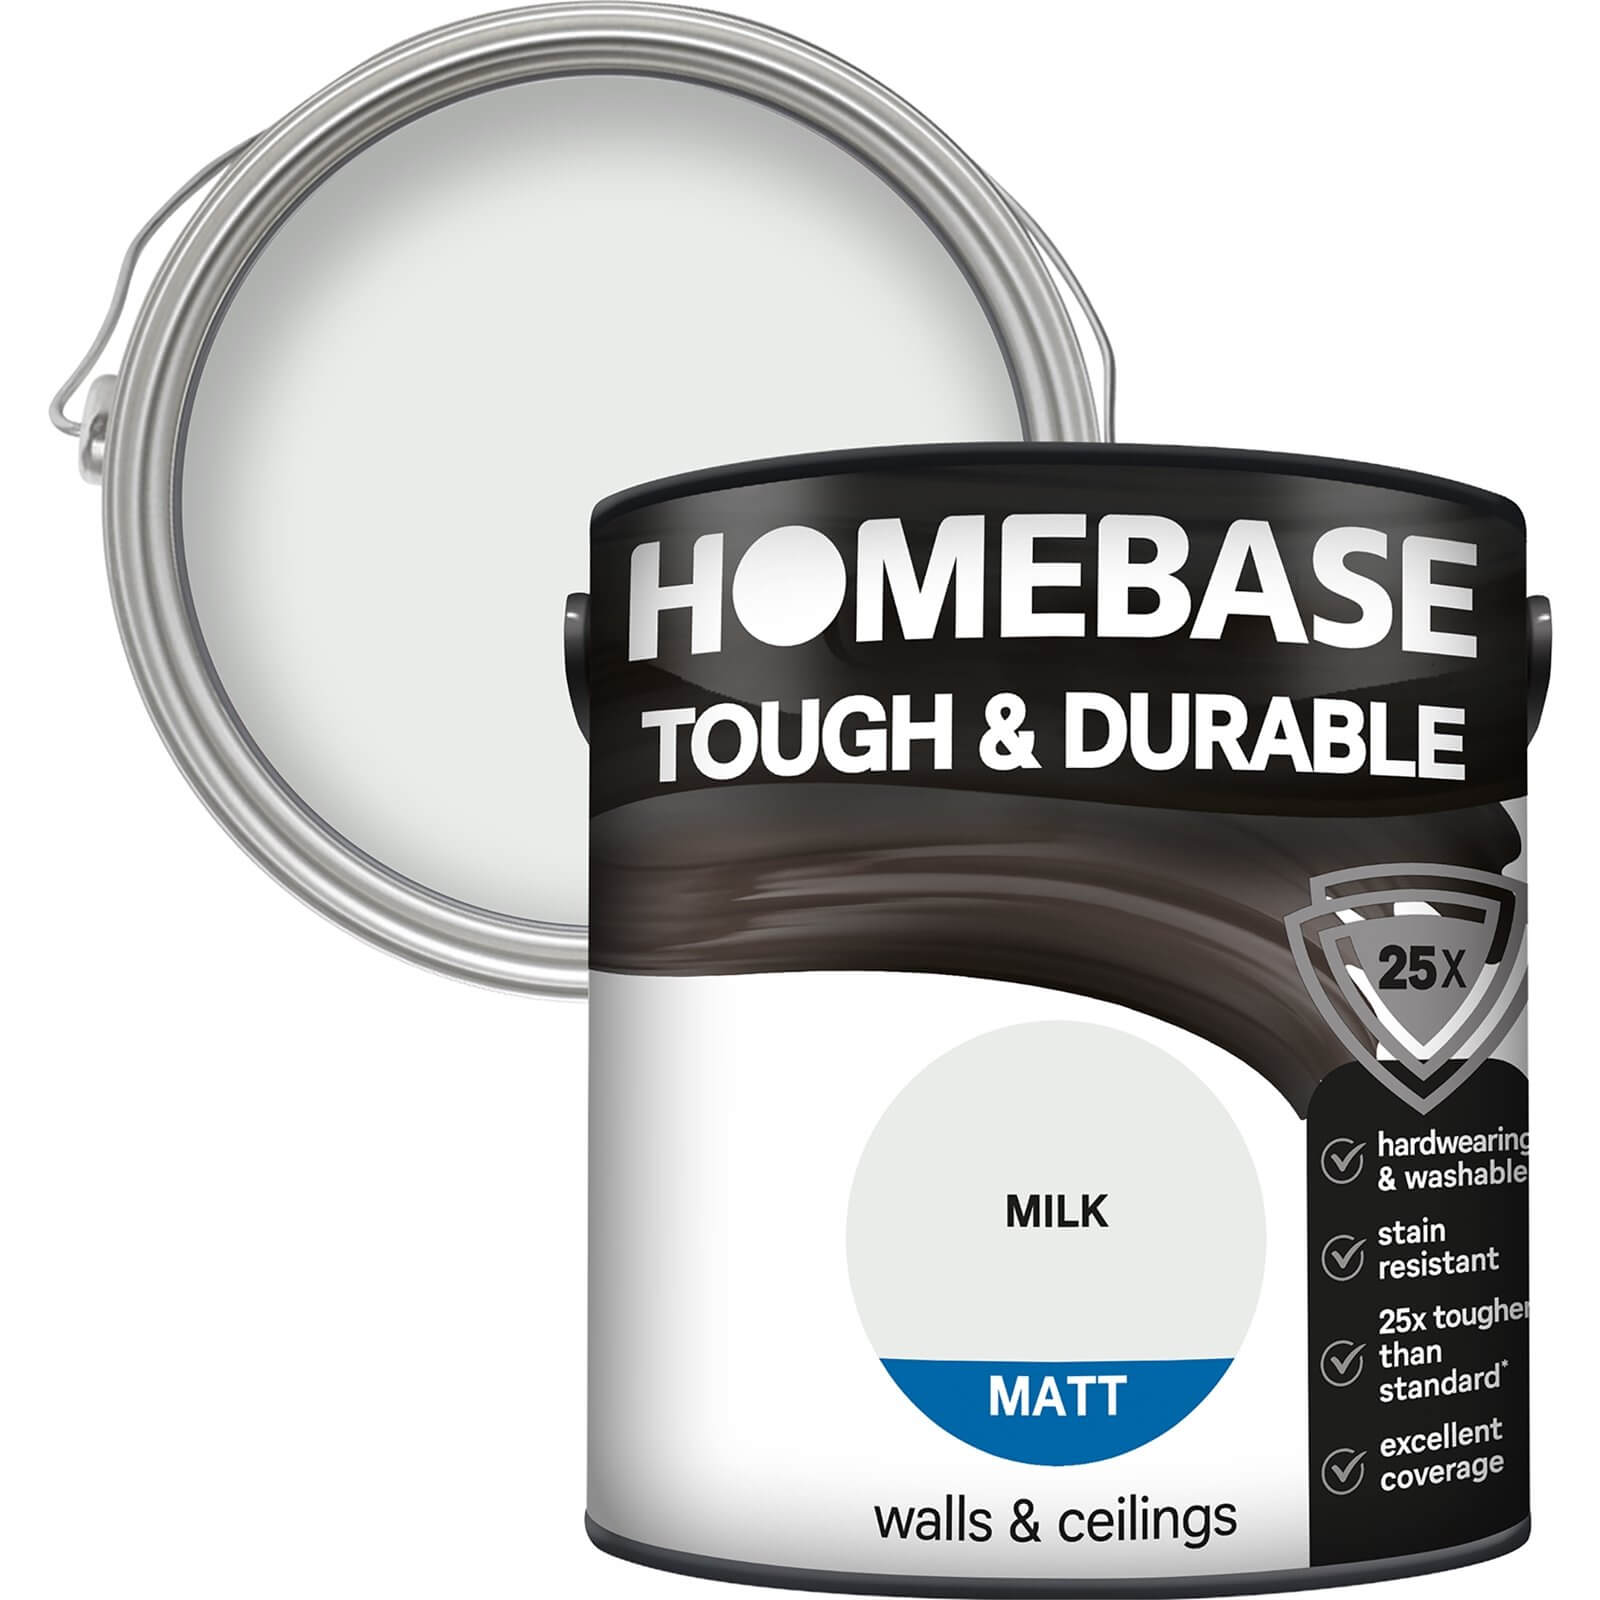 Homebase Tough & Durable Matt Paint Milk - 2.5L